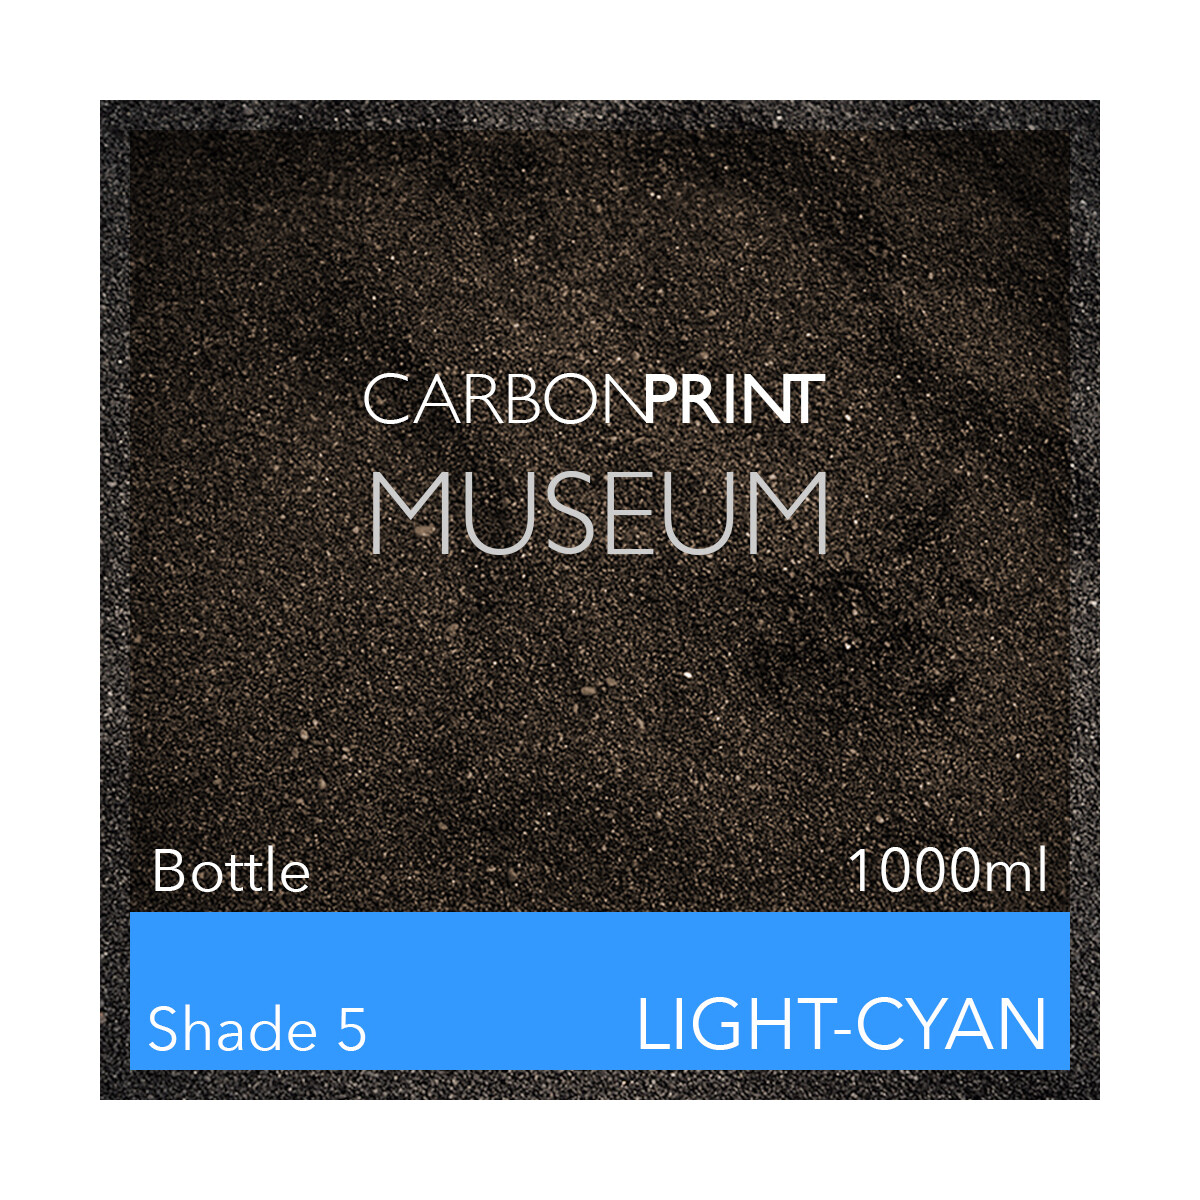 Carbonprint Museum Shade5 Kanal LC 1000ml